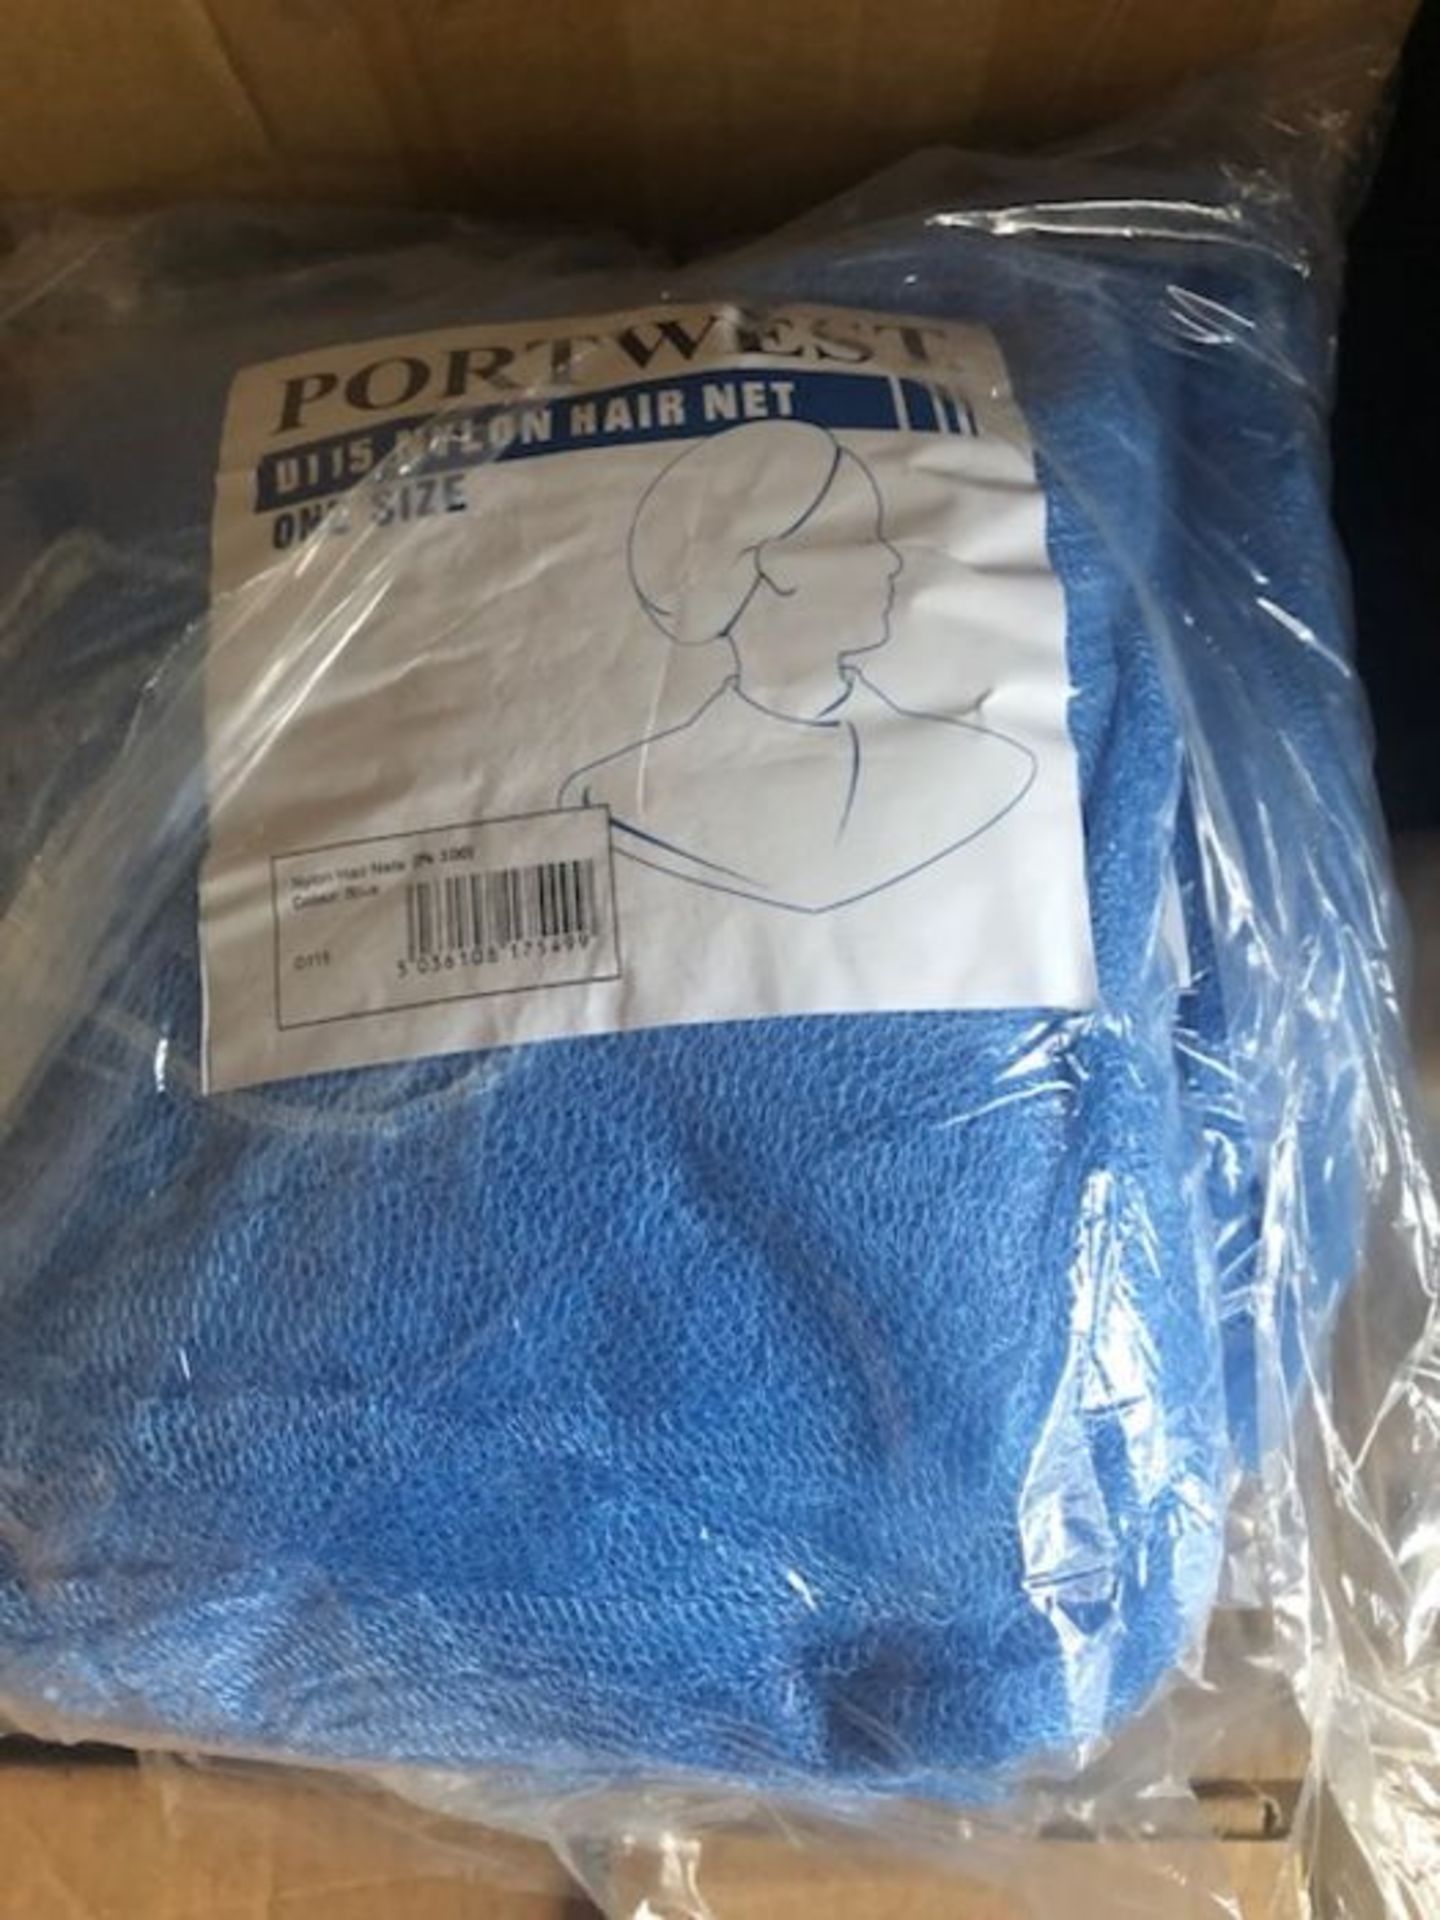 Bag of 1000 x Portwest D115 Nylon Disposable Hairnet - H9R 2000150939 - Image 5 of 6